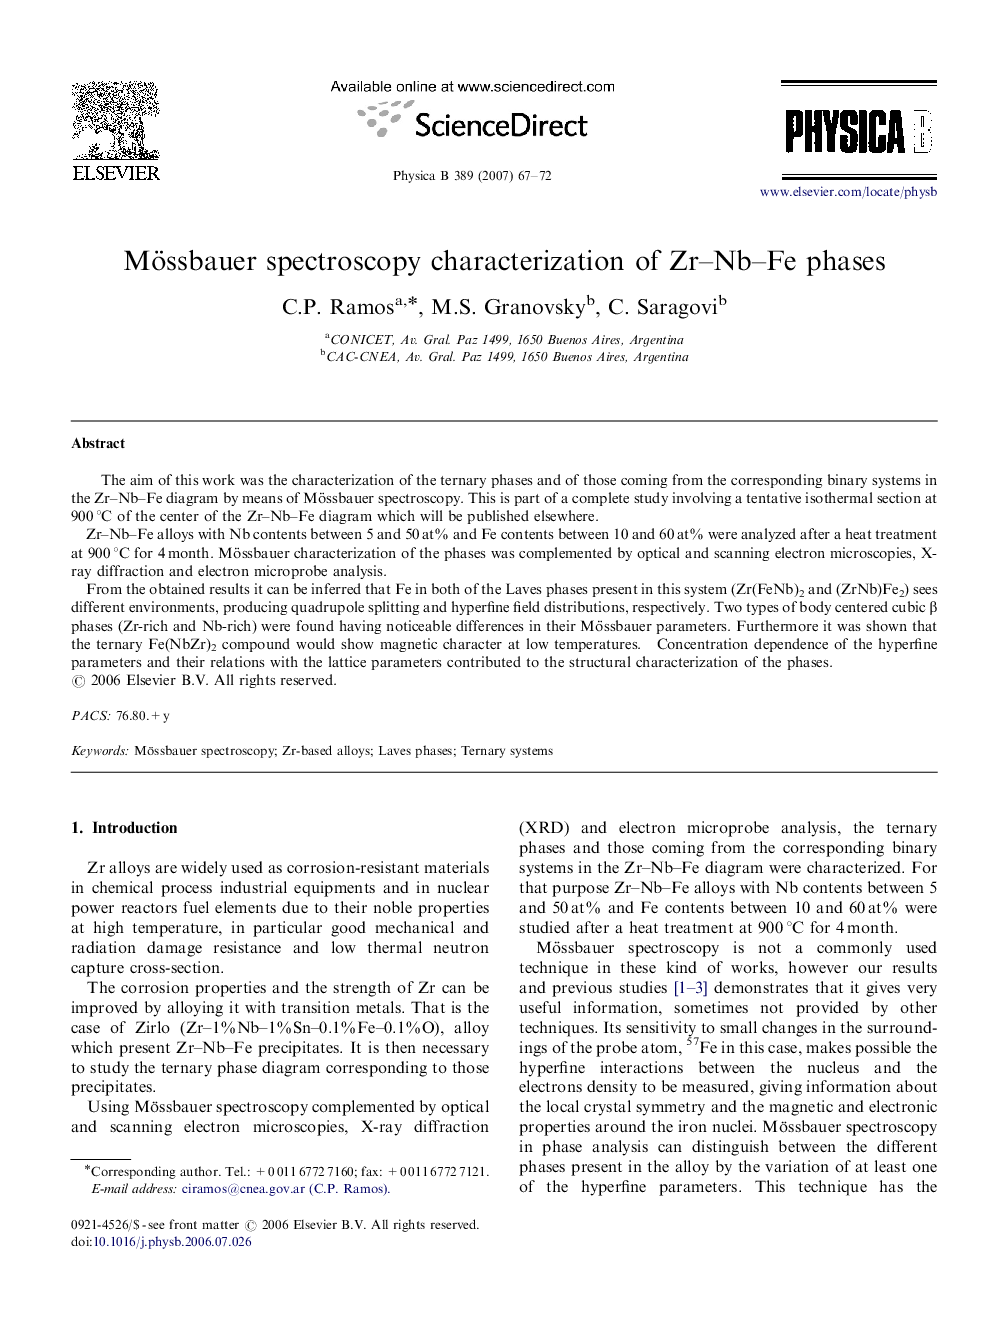 Mössbauer spectroscopy characterization of Zr-Nb-Fe phases